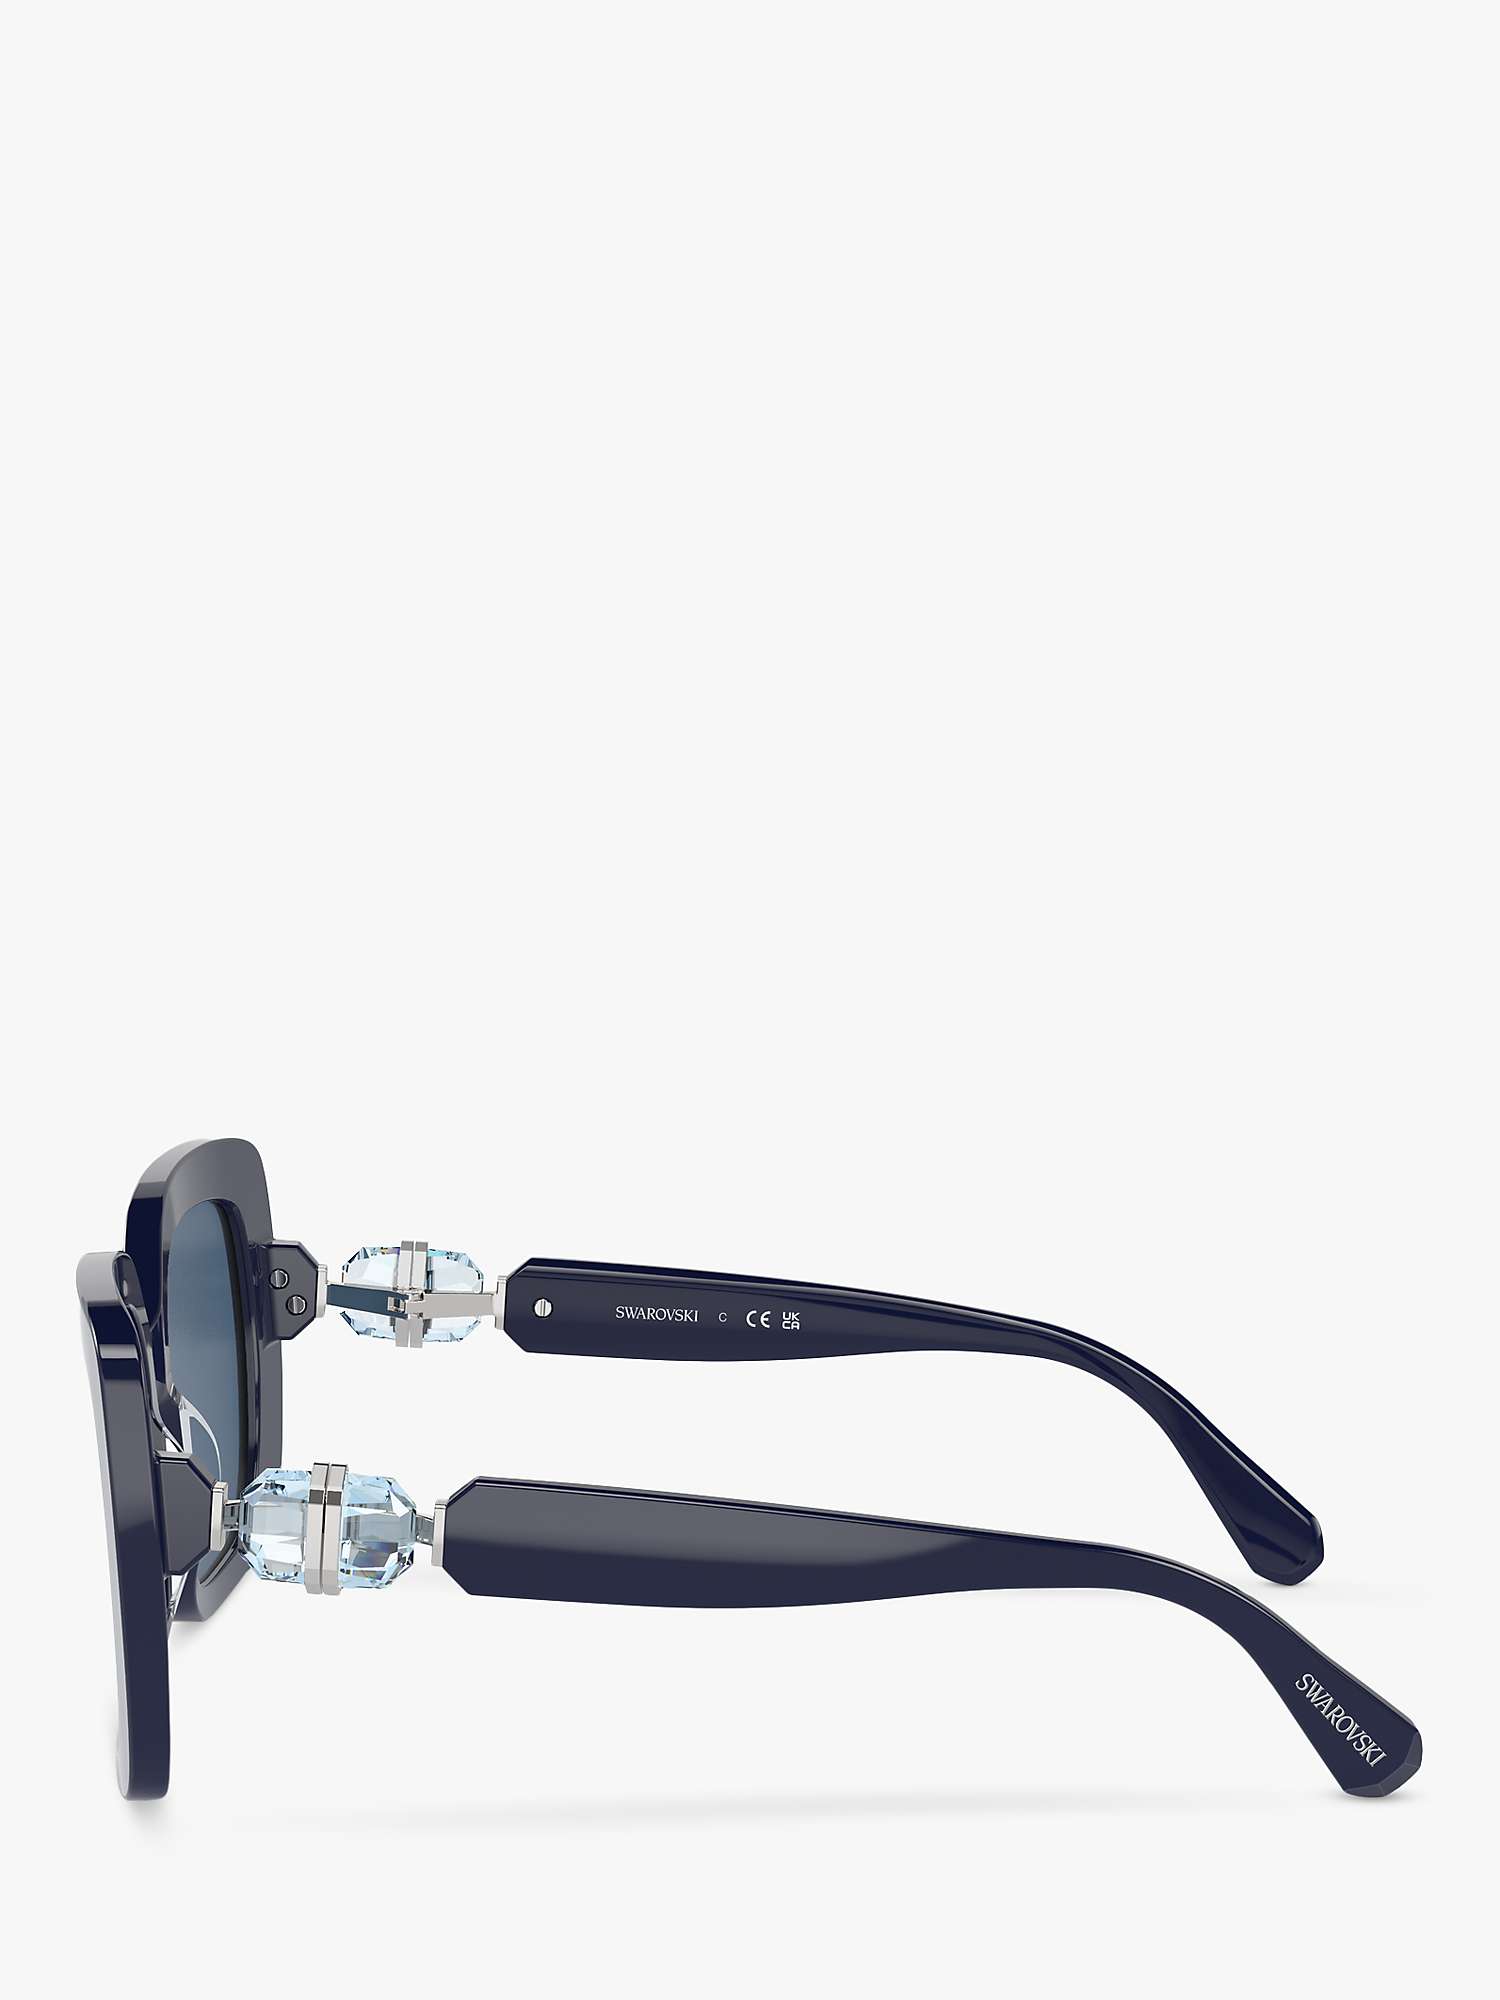 Buy Swarovski SK6001 Women's Square Sunglasses, Opal Blue Online at johnlewis.com